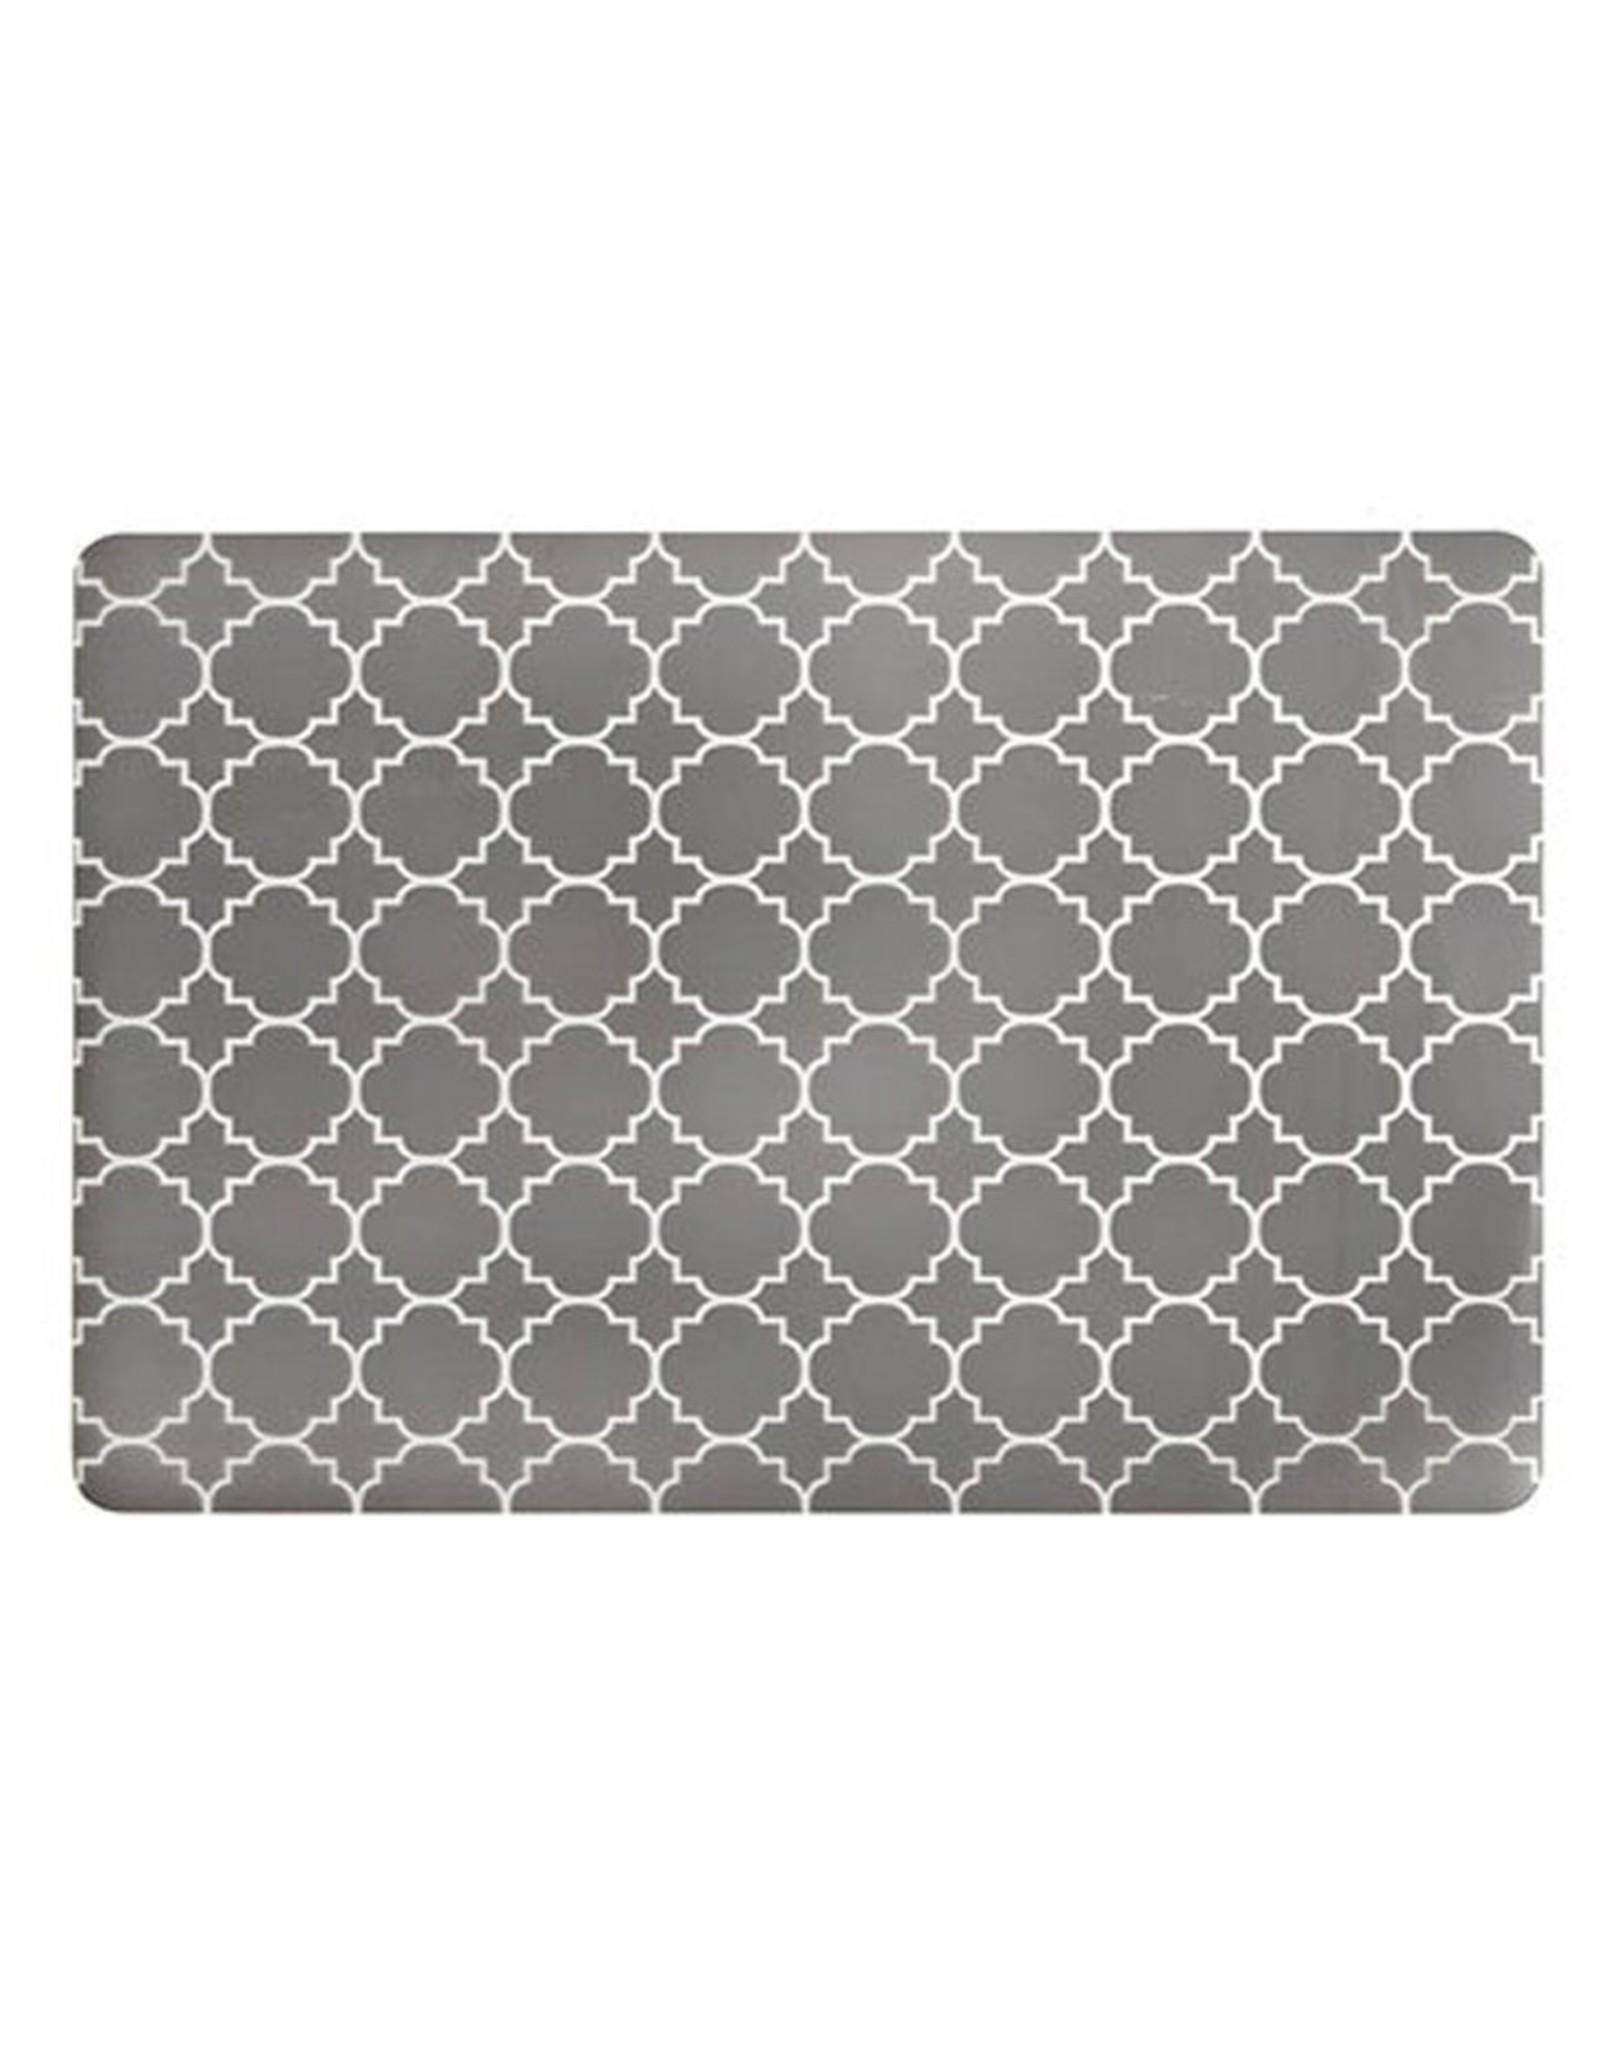 Placemat Harman Panama Tile Soft Touch Grey  49780463